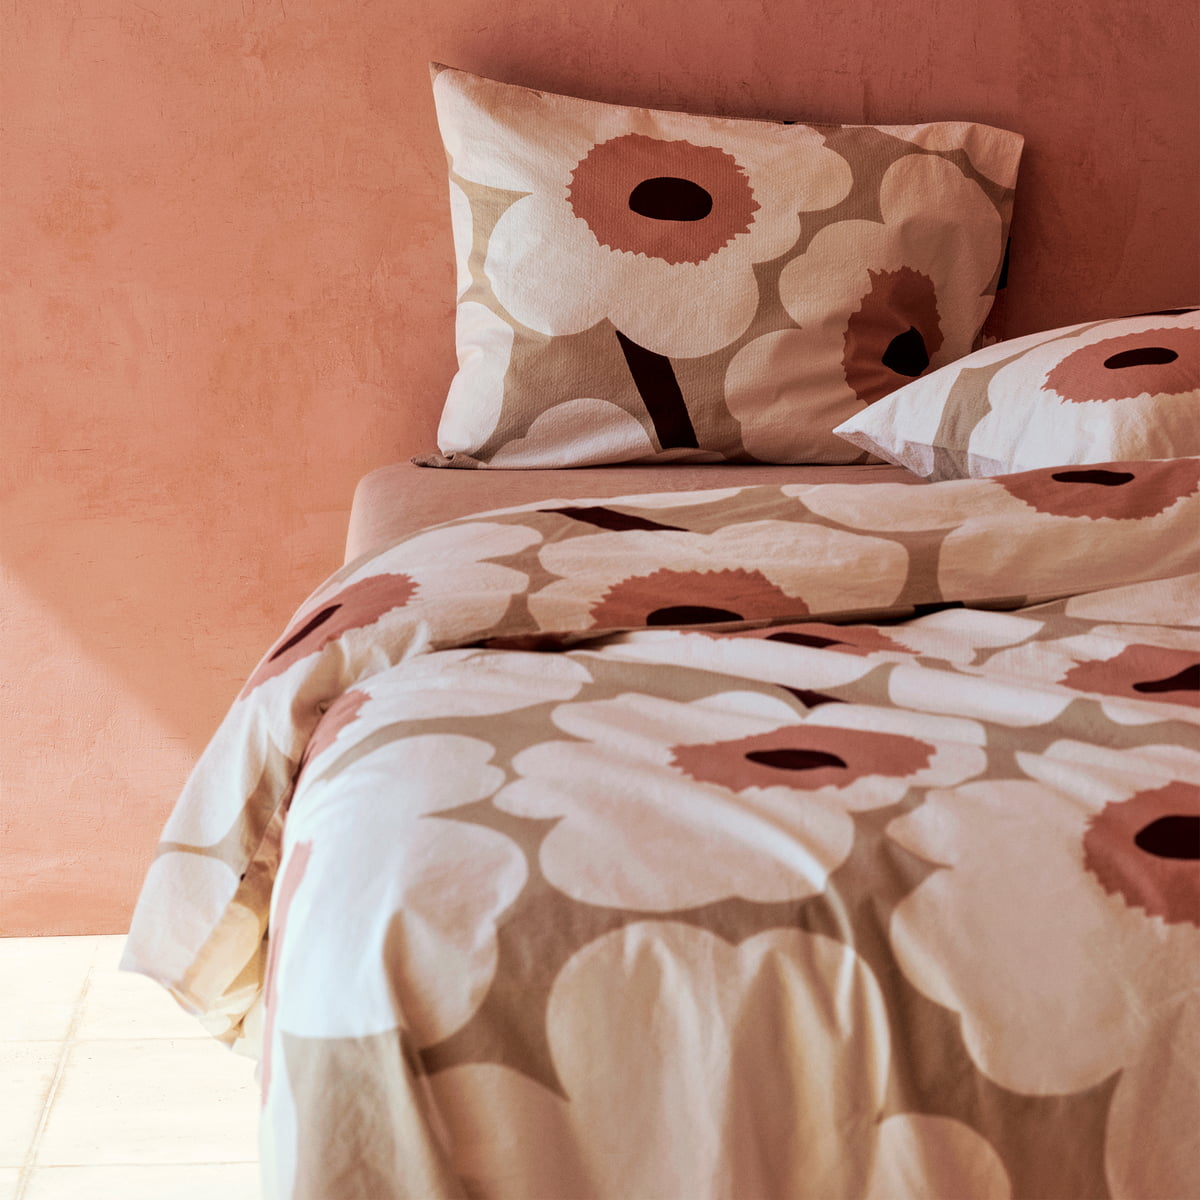 Solo Pink Floral Cotton Duvet Cover Bedding Set - Super King Size